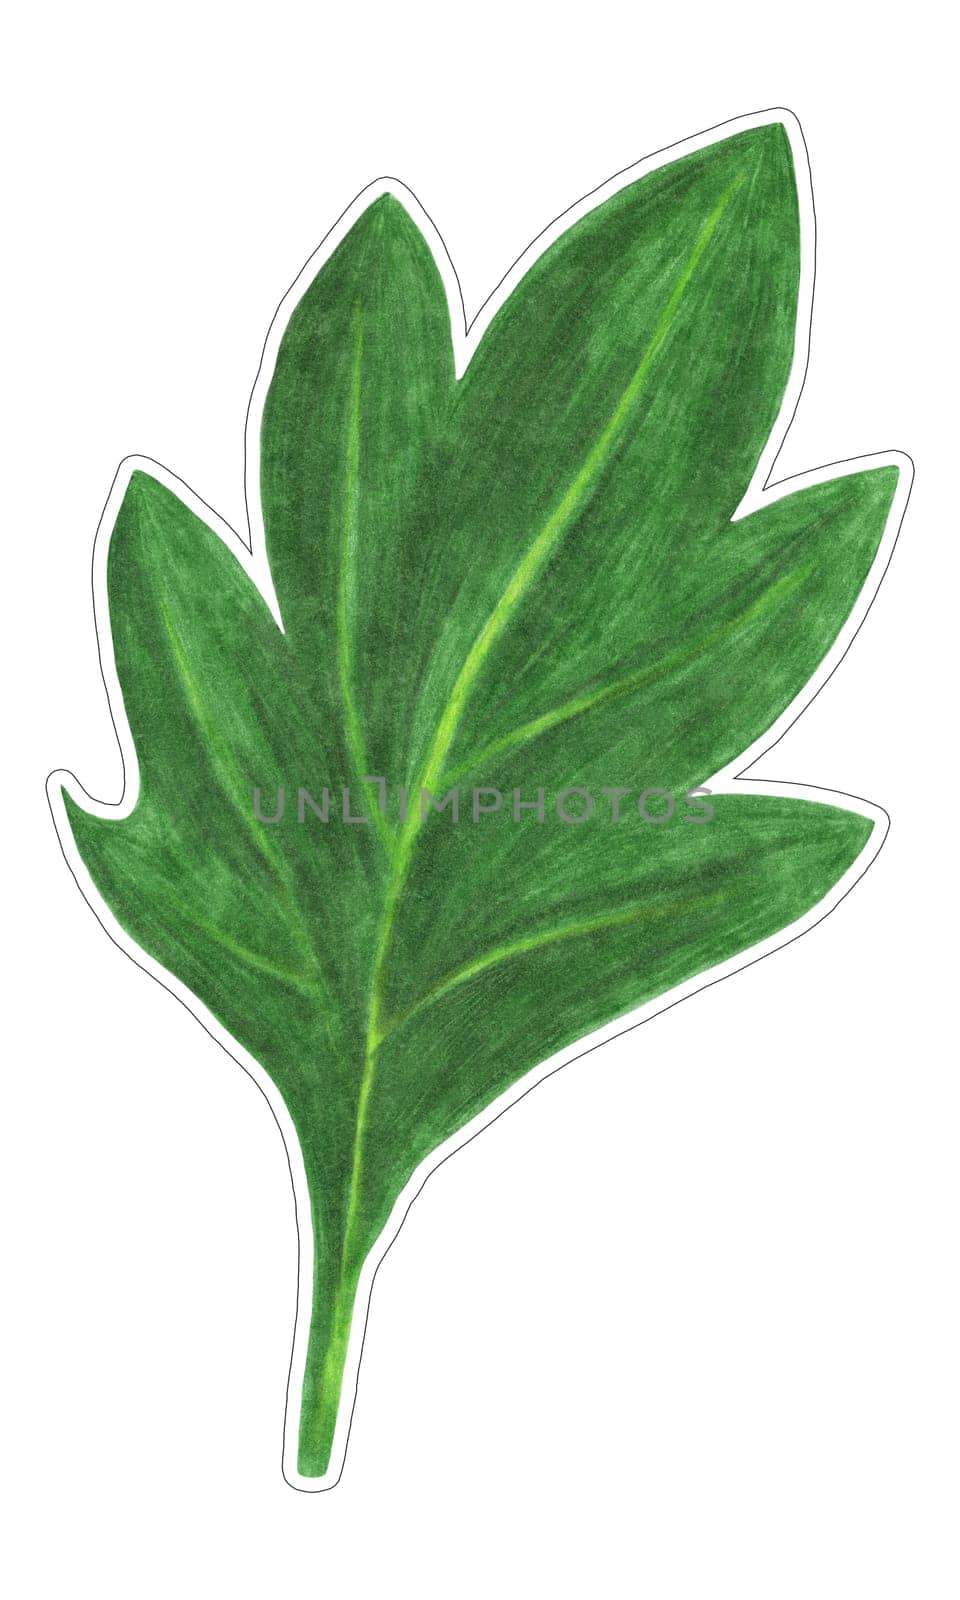 Hand Drawn Green Leaf Sticker Isolated on White Background. by Rina_Dozornaya